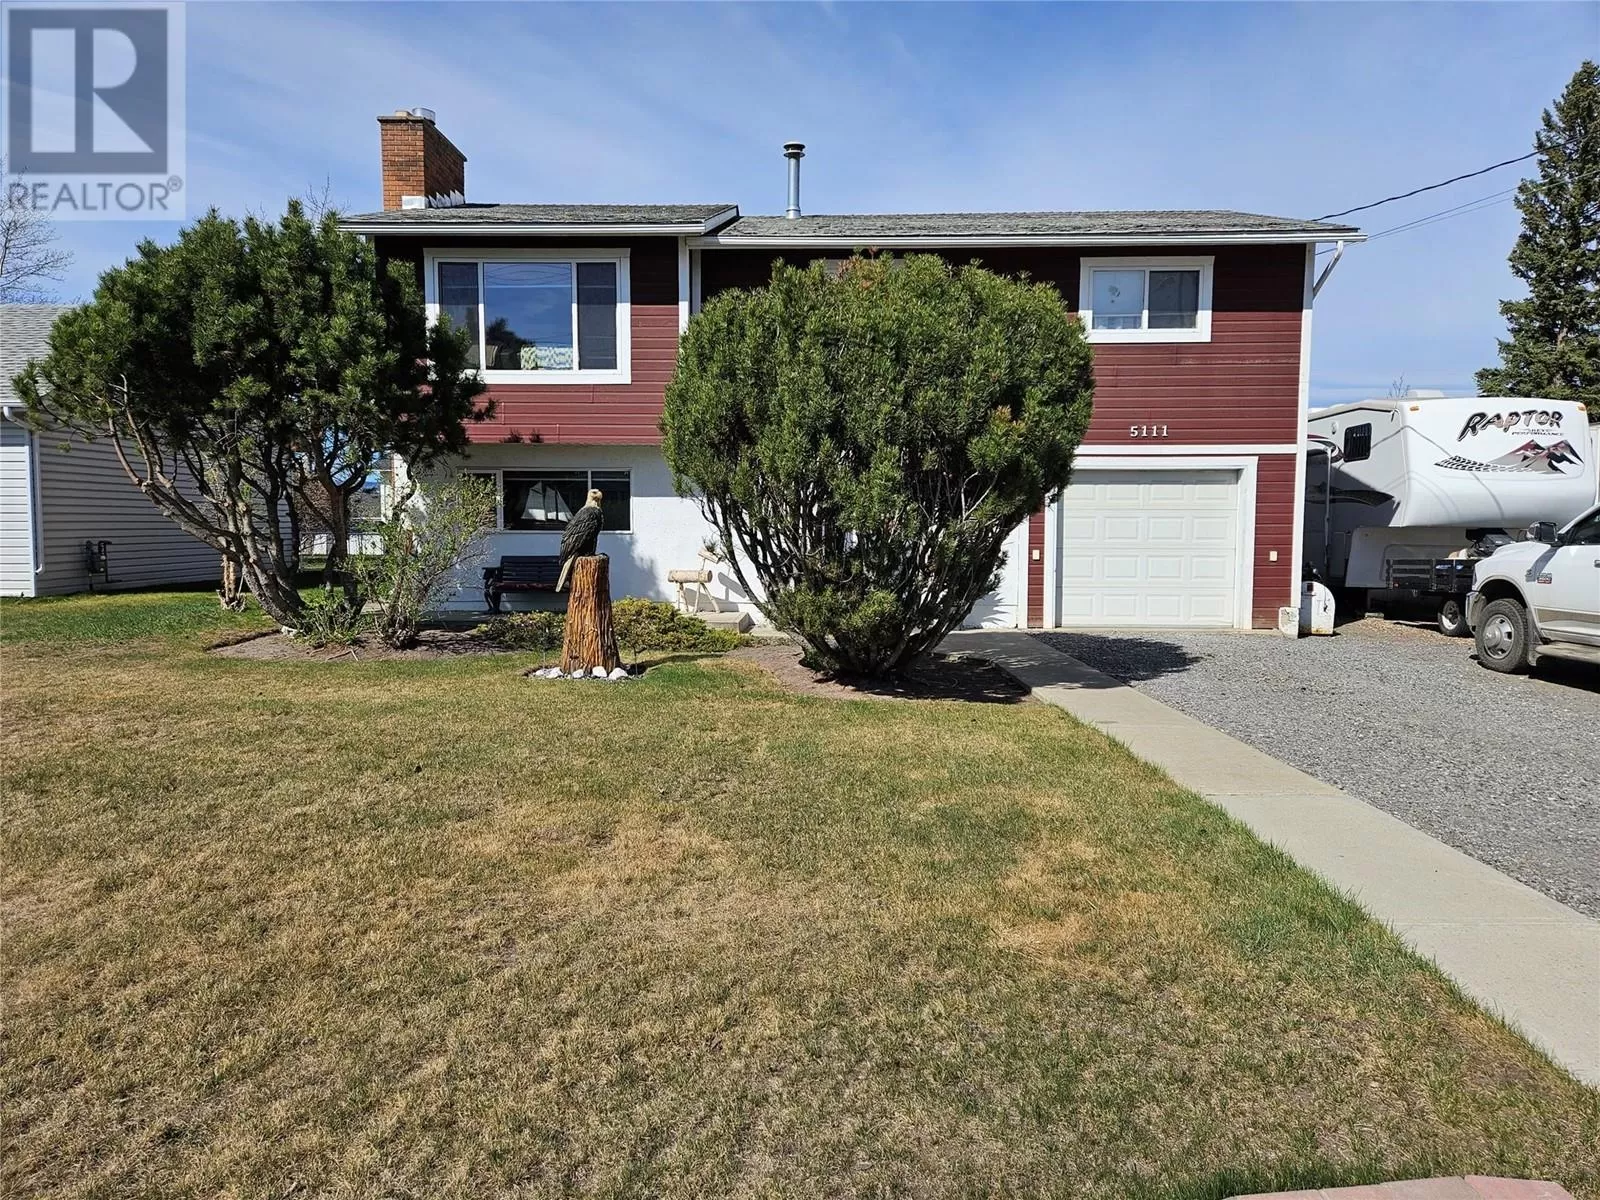 House for rent: 5111a 43 Street Ne, Chetwynd, British Columbia V0C 1J0